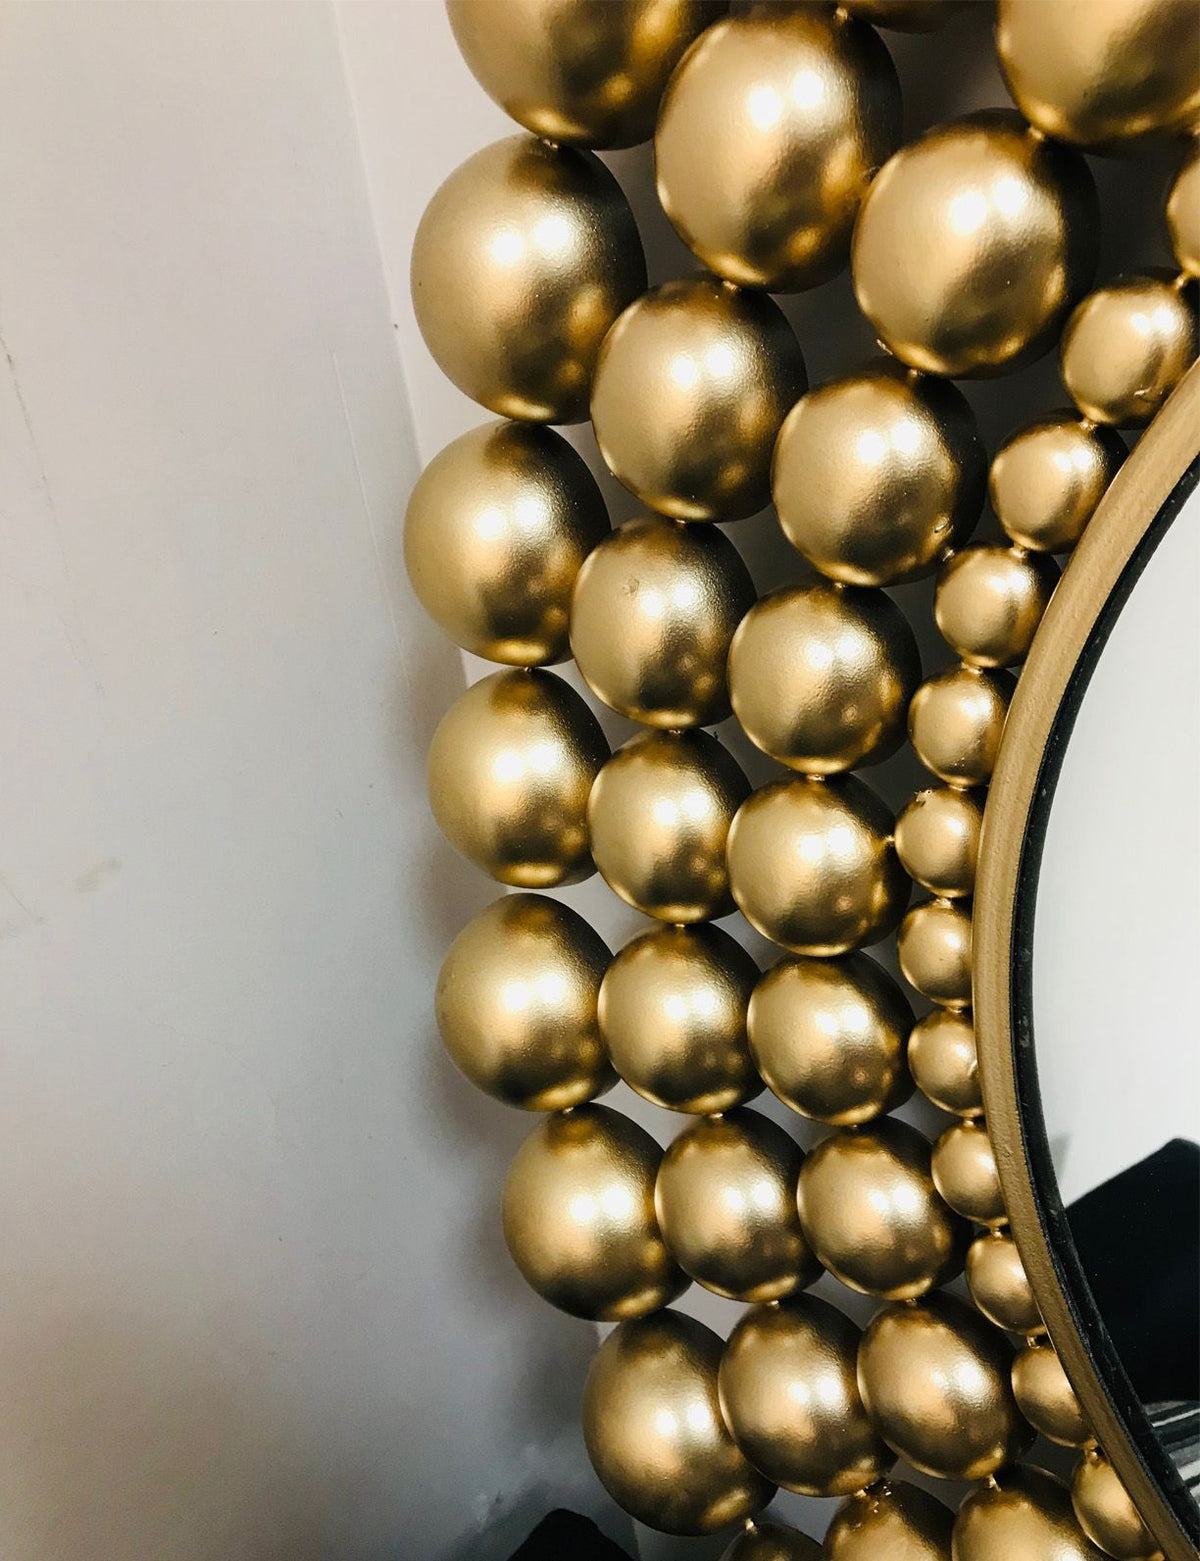 Golden Bobbles Decorative Mirror